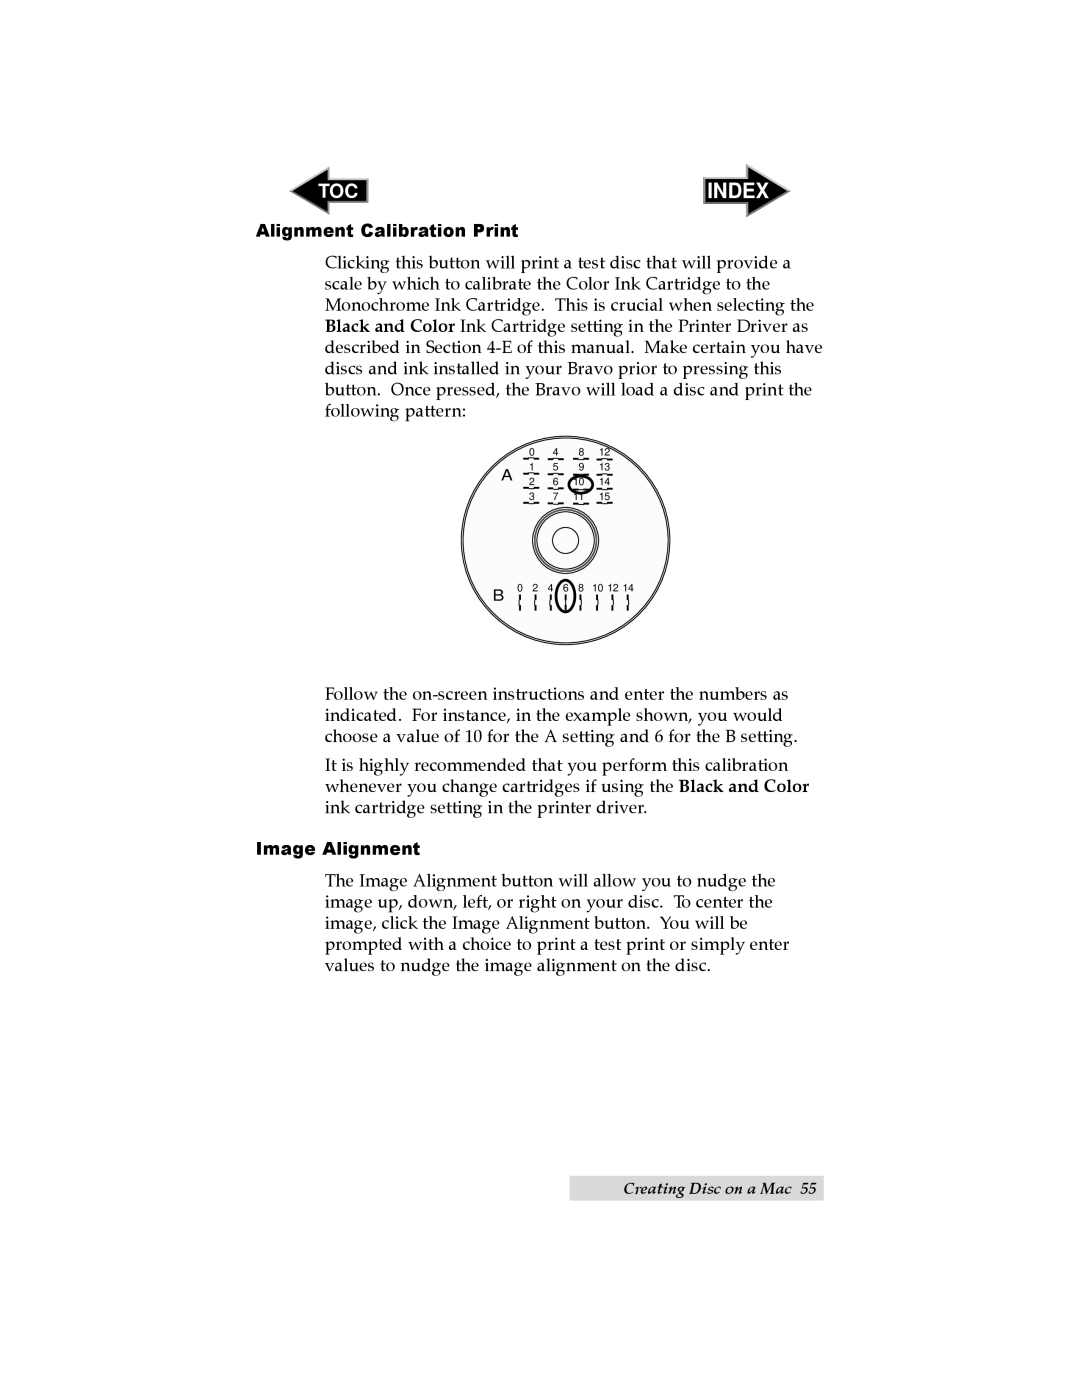 Primera Technology II user manual Index, Alignment Calibration Print, Image Alignment 